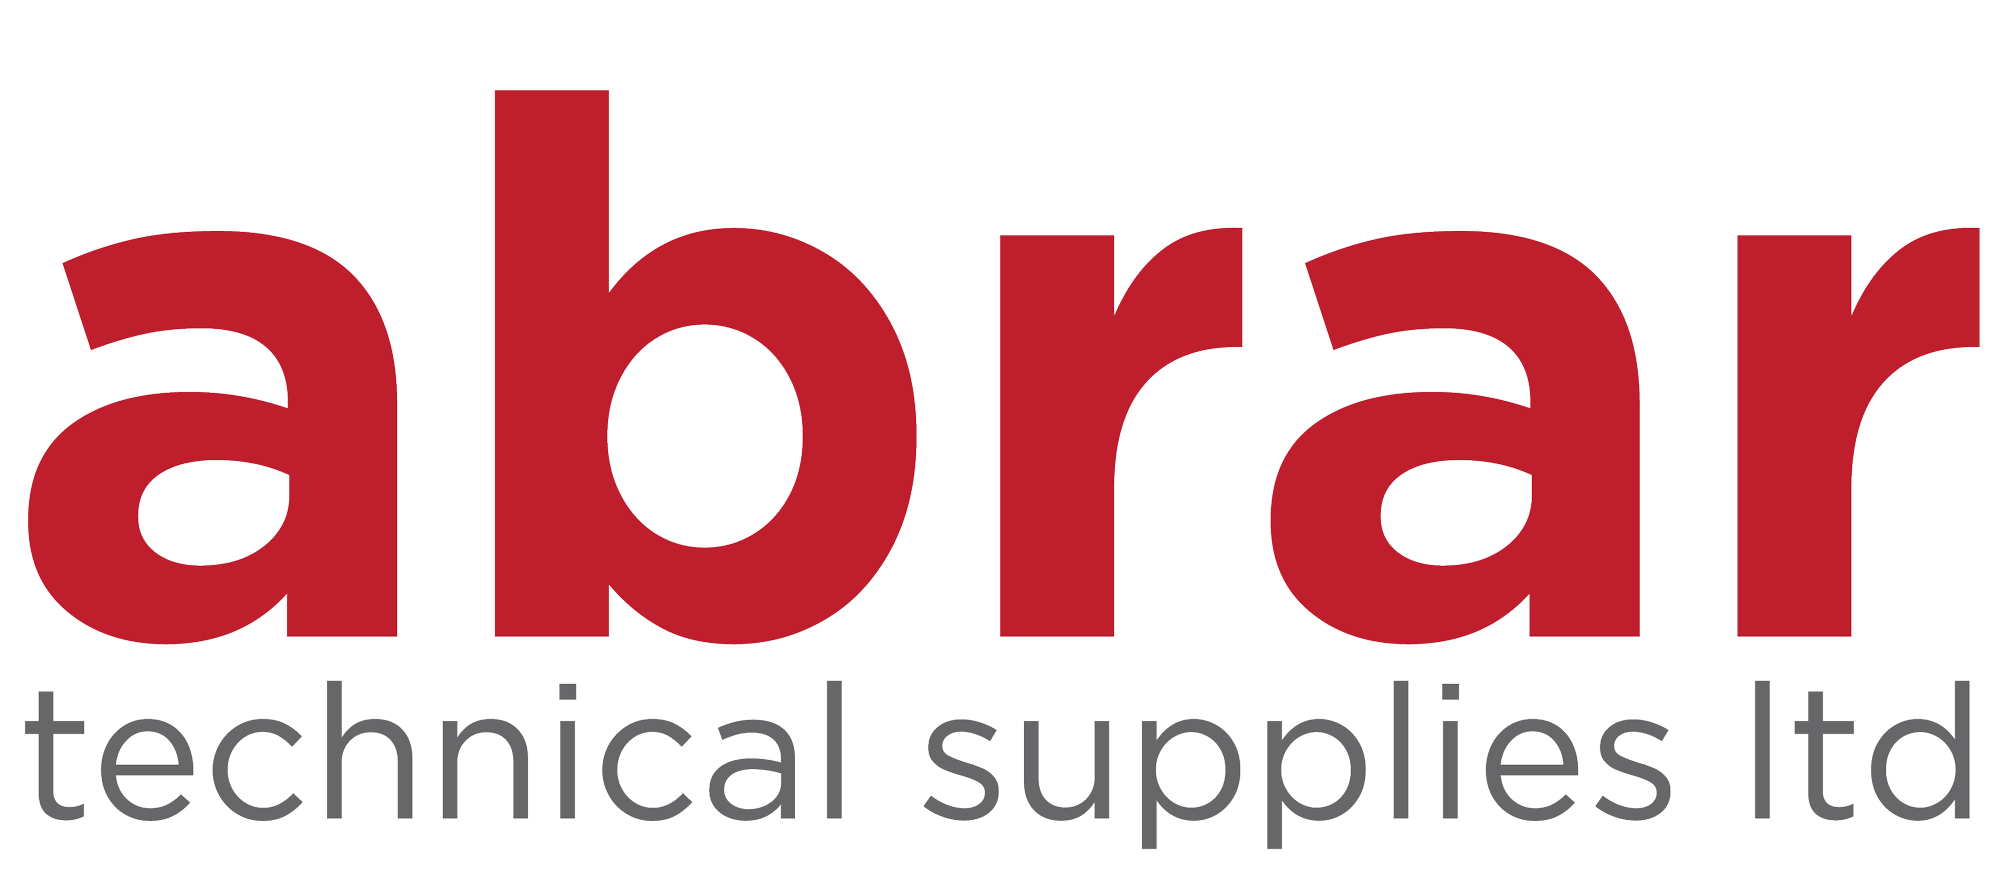 Abrar Technical Supplies Ltd